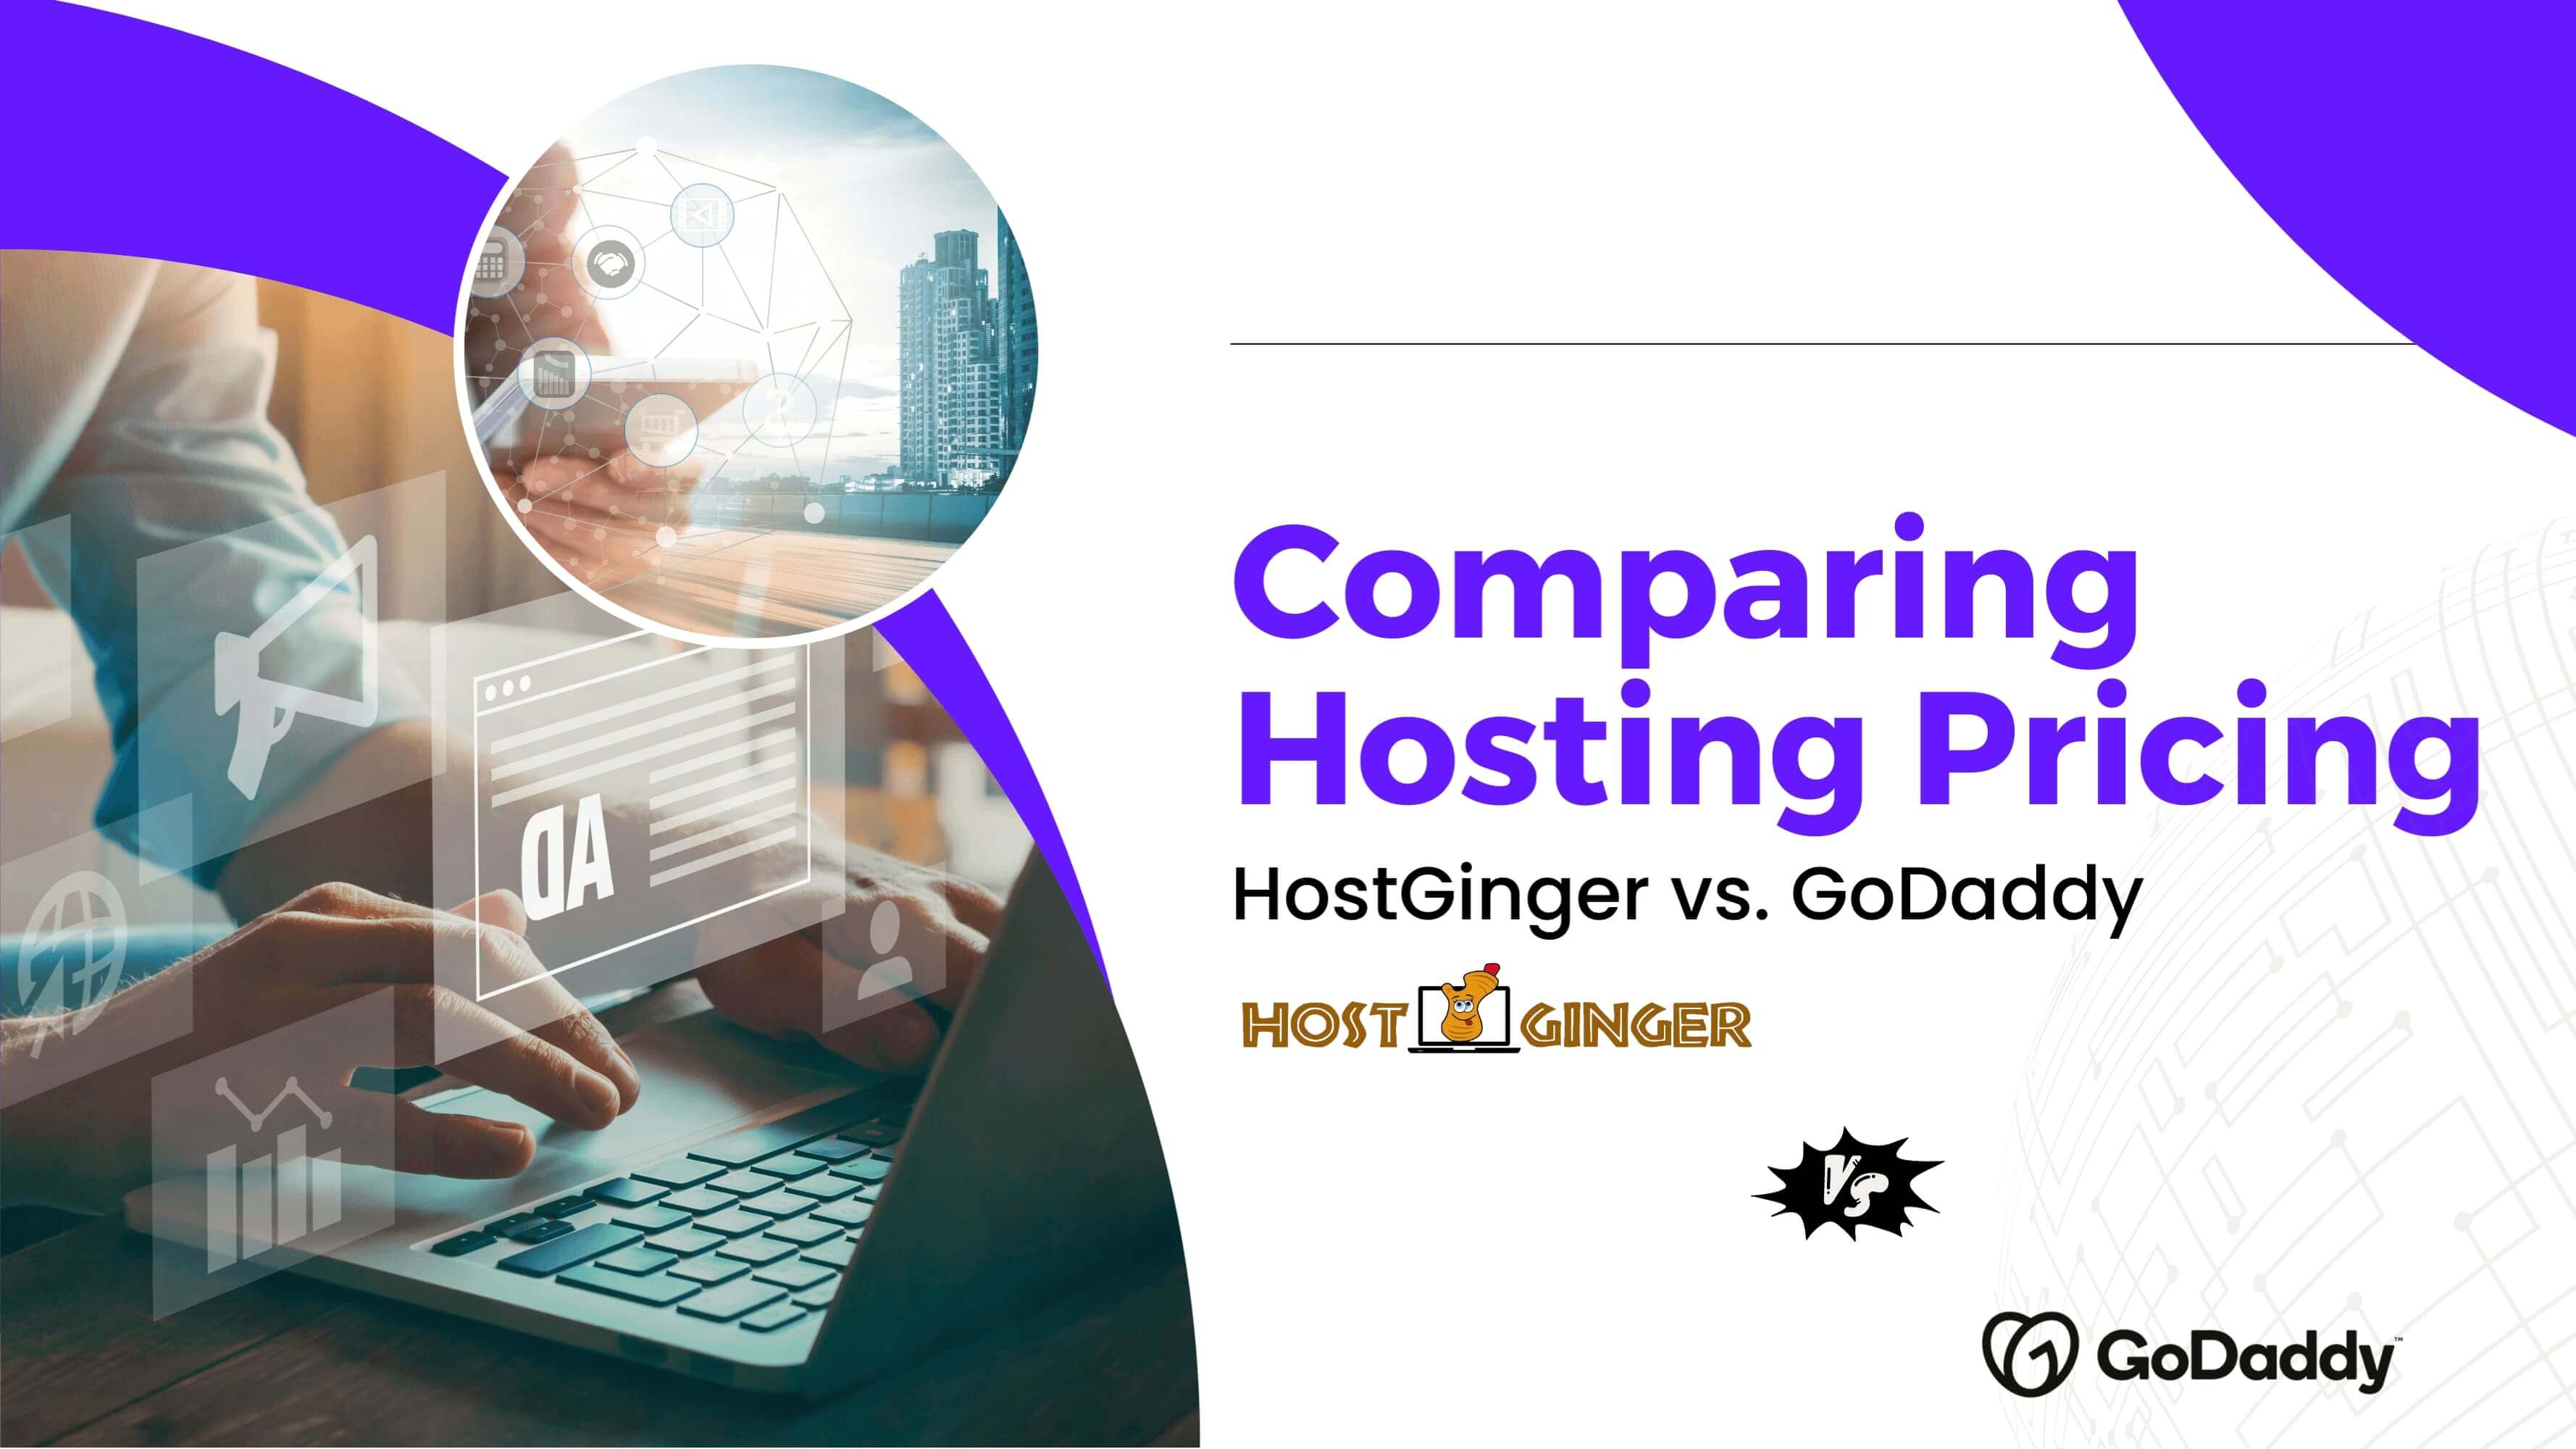 Comparing Hosting Pricing: Hostginger vs. GoDaddy